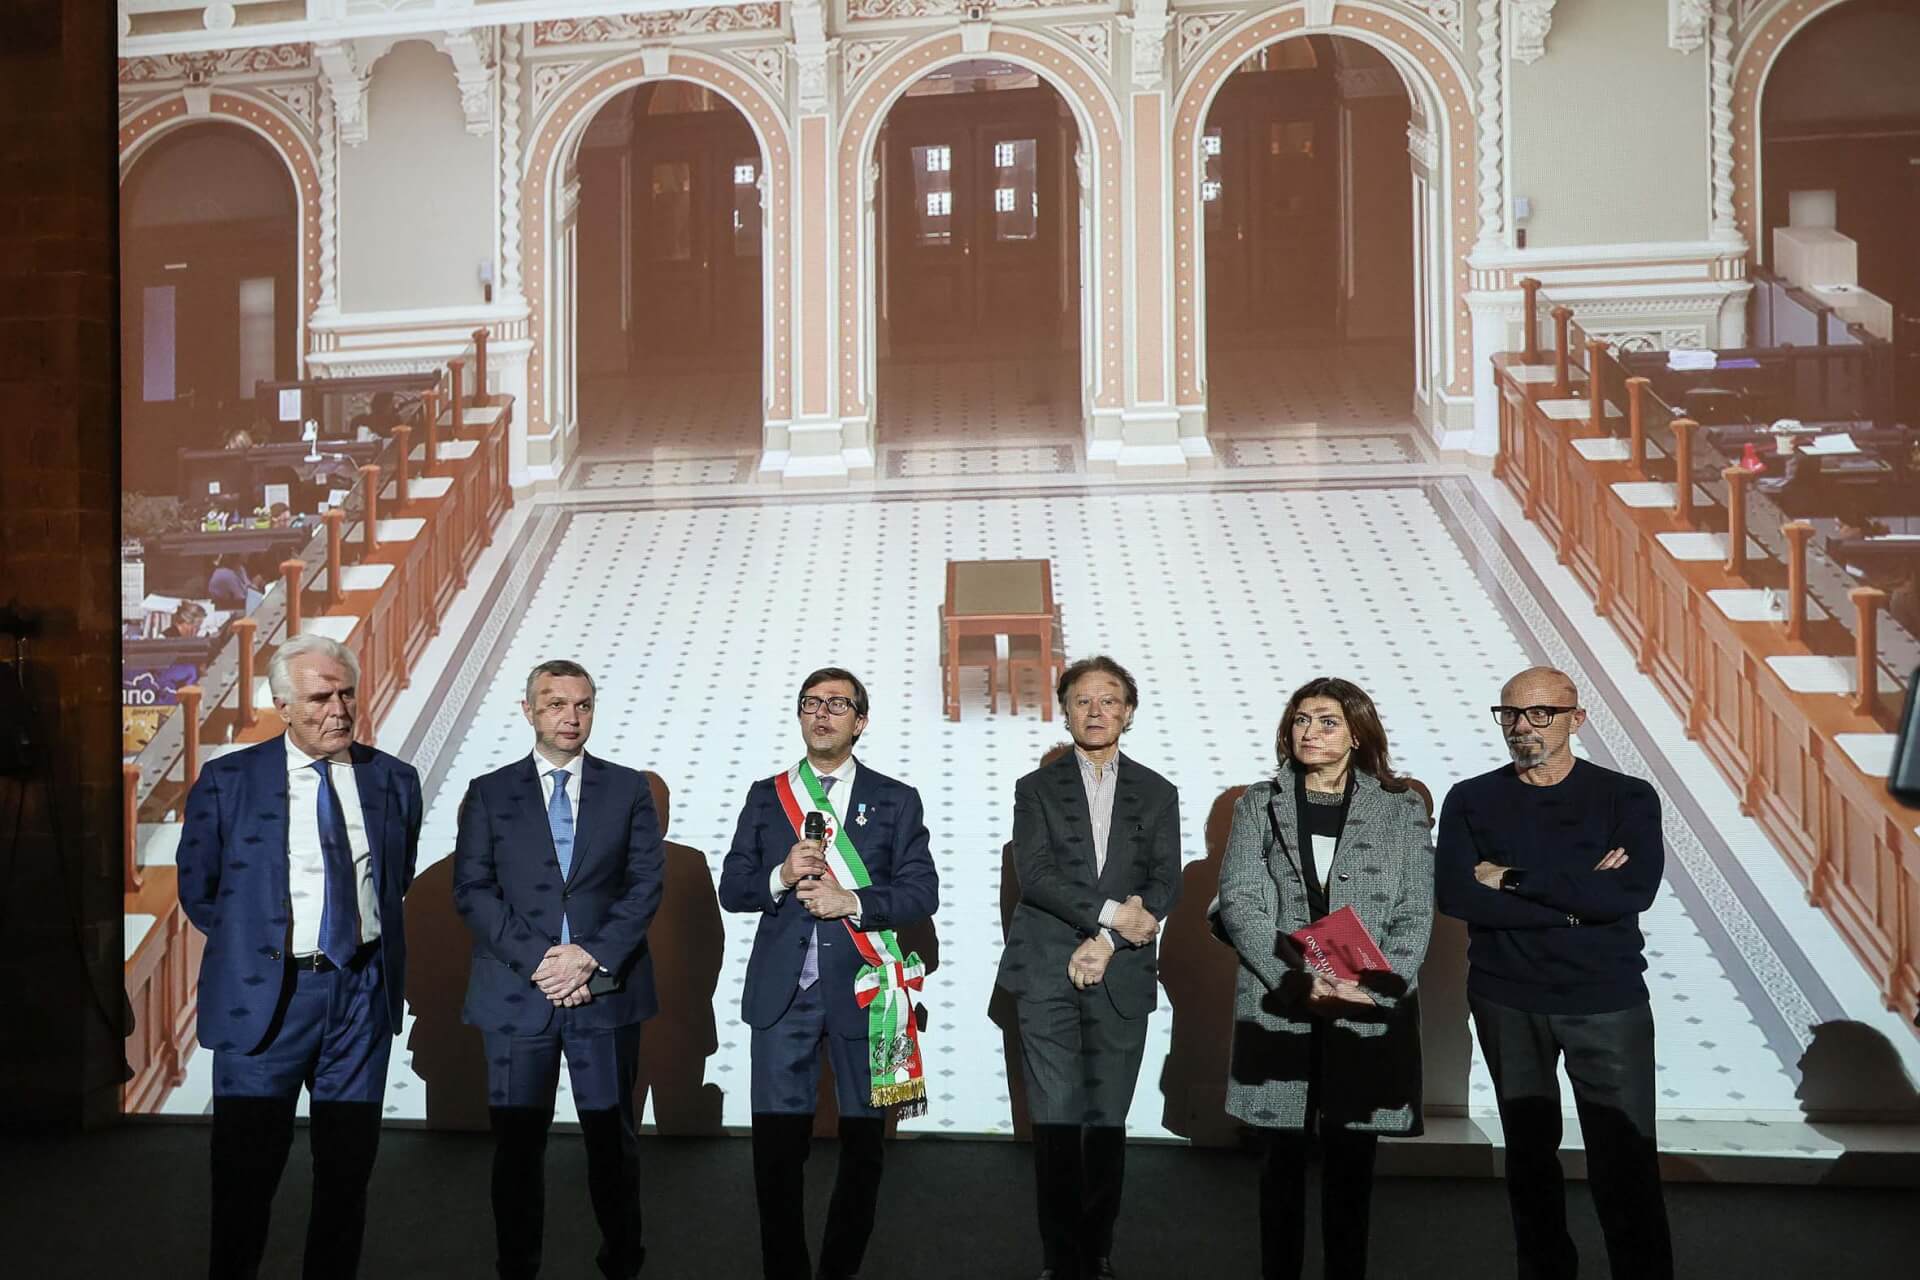 Eugenio Giani, Yaroslav Melnyk, Dari Nardella, Massimo Listri, Alessia Bettini, Sergio Risaliti


